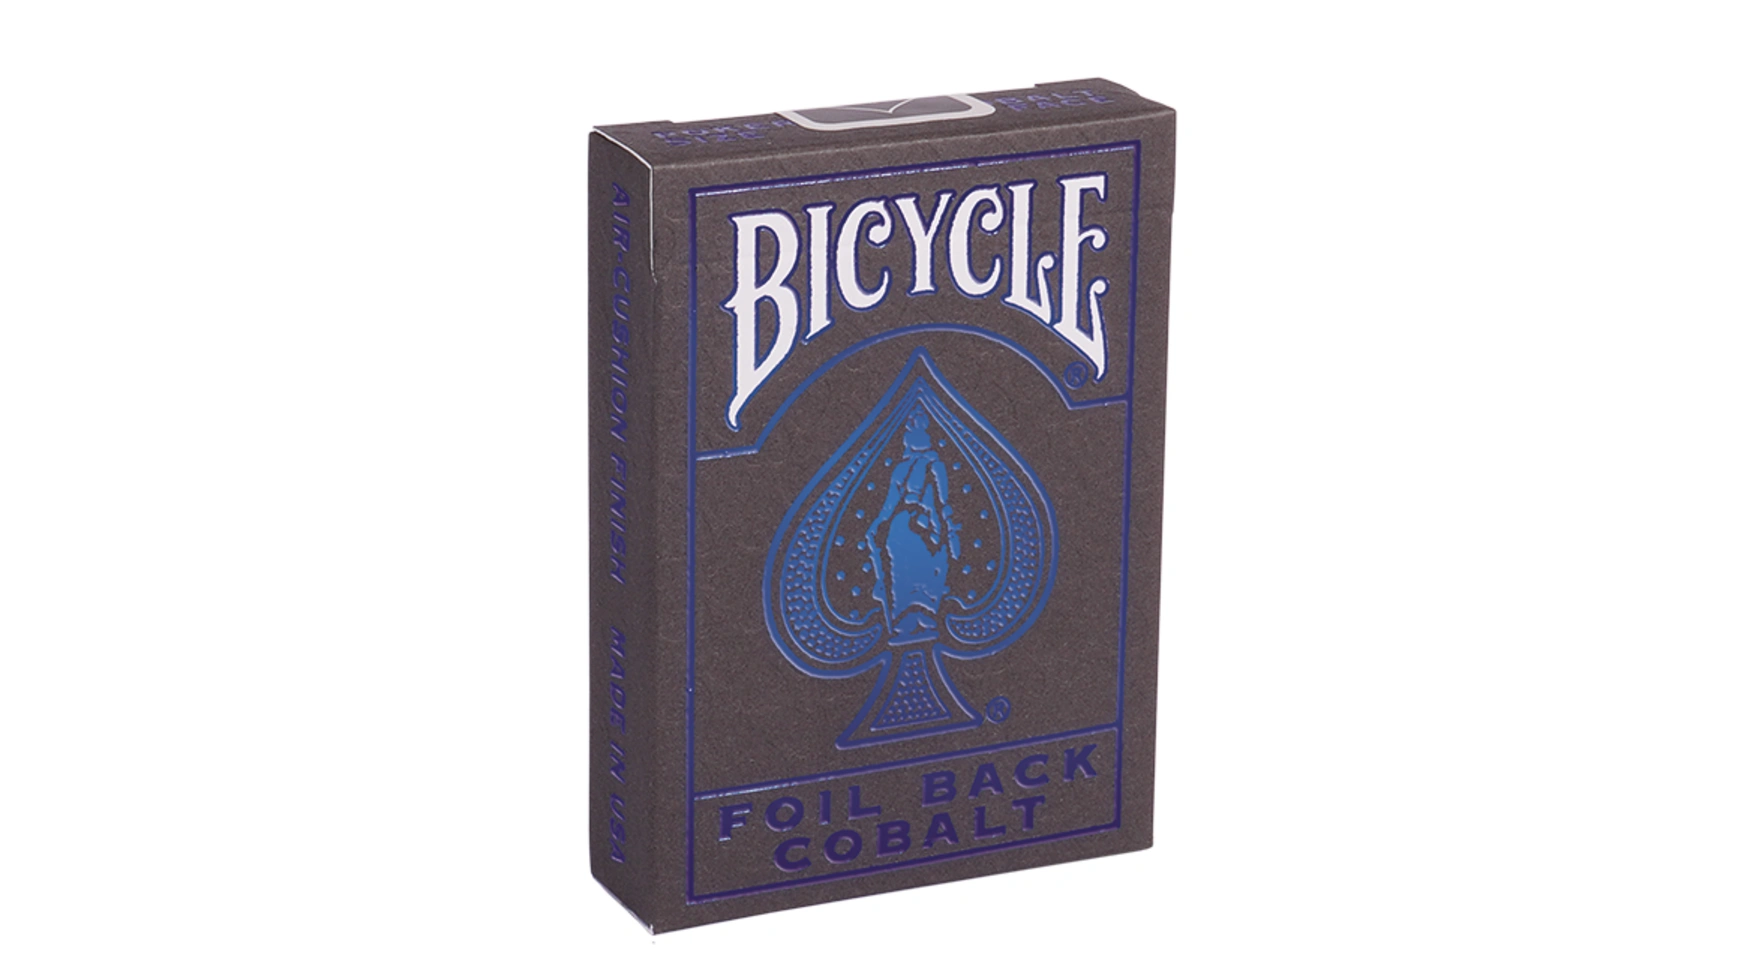 Bicycle игральные карты Metalluxe Blue карты bicycle stripper deck red blue